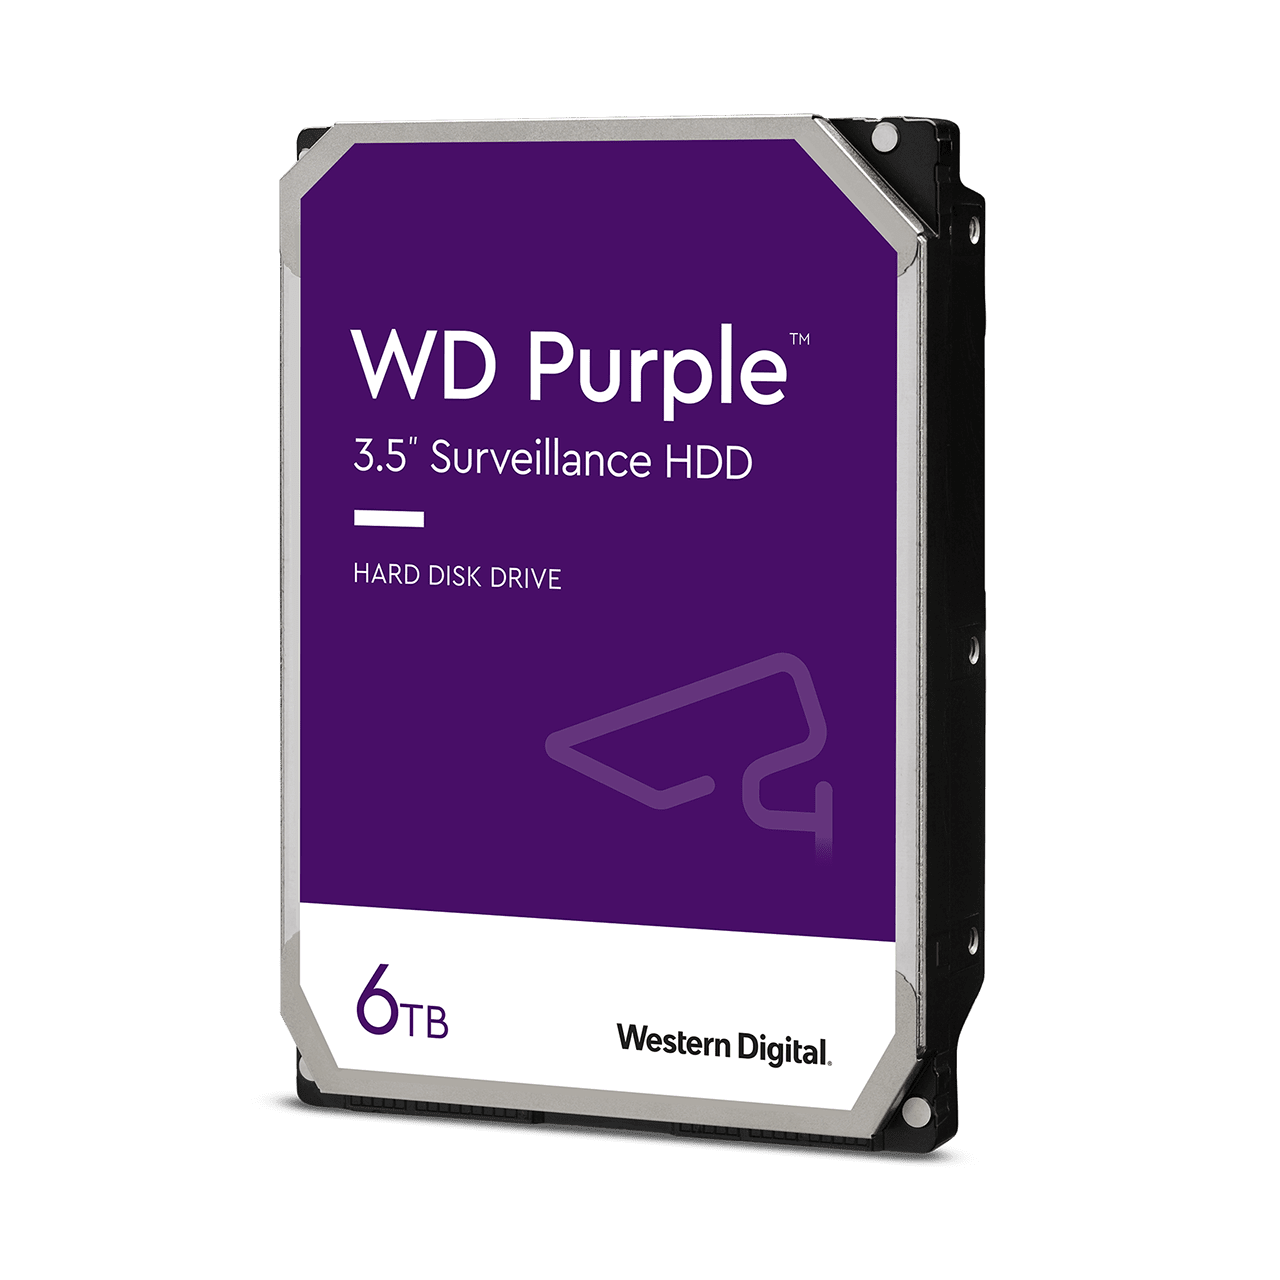 WD Purple™ Surveillance Hard Drive - 6TB - Image7